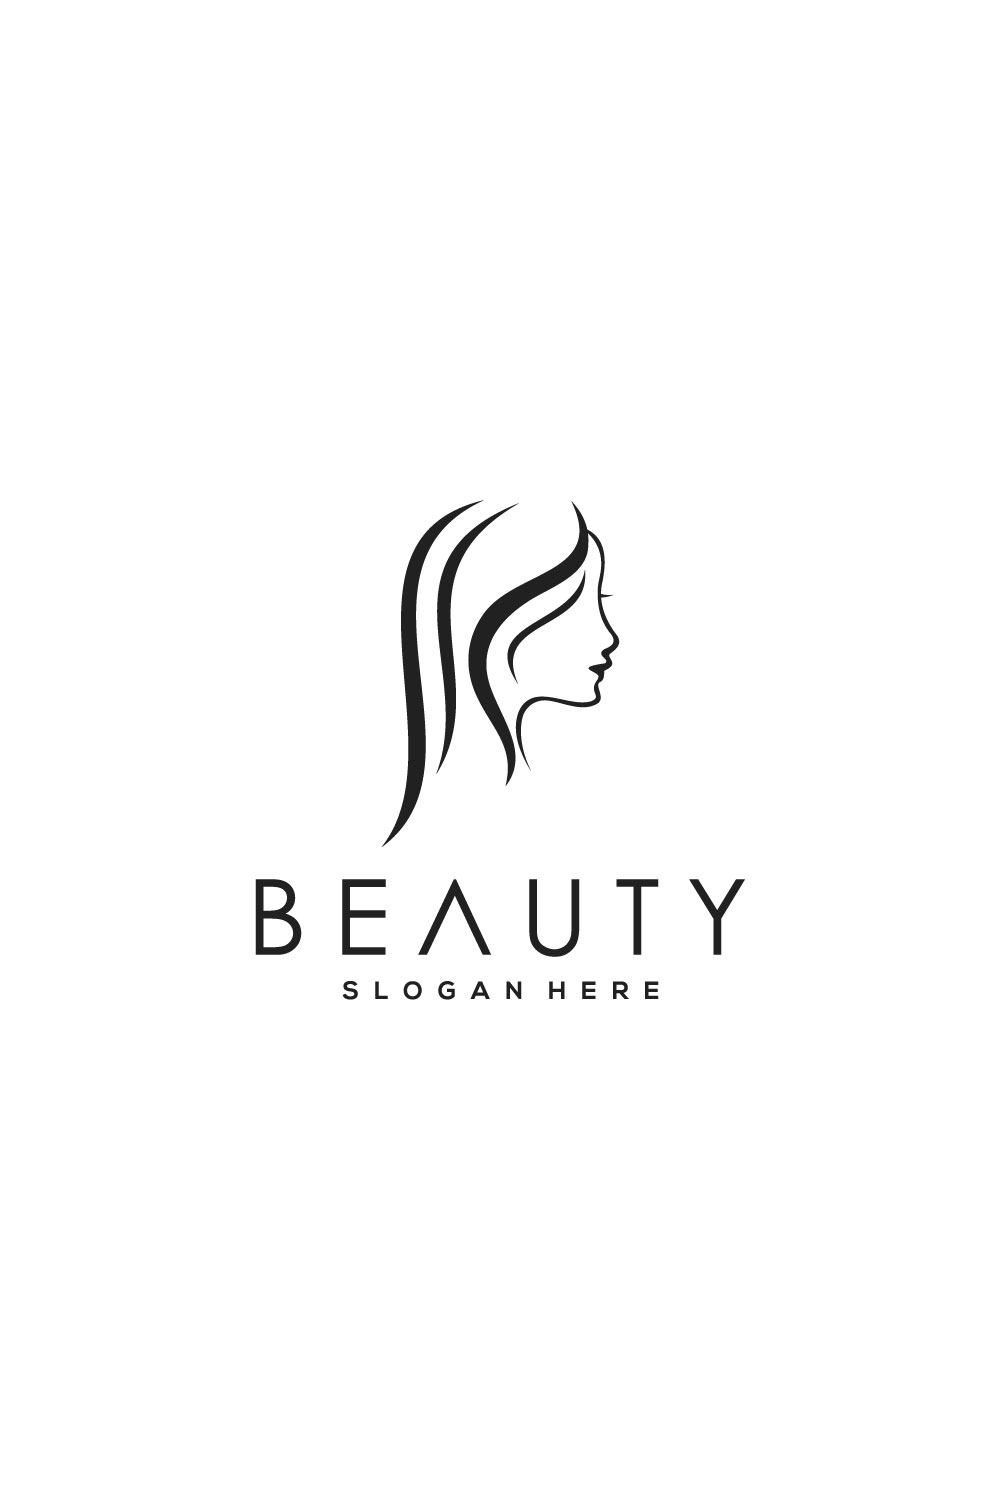 Beauty Woman Face Logo Vector Design - Pinterest.